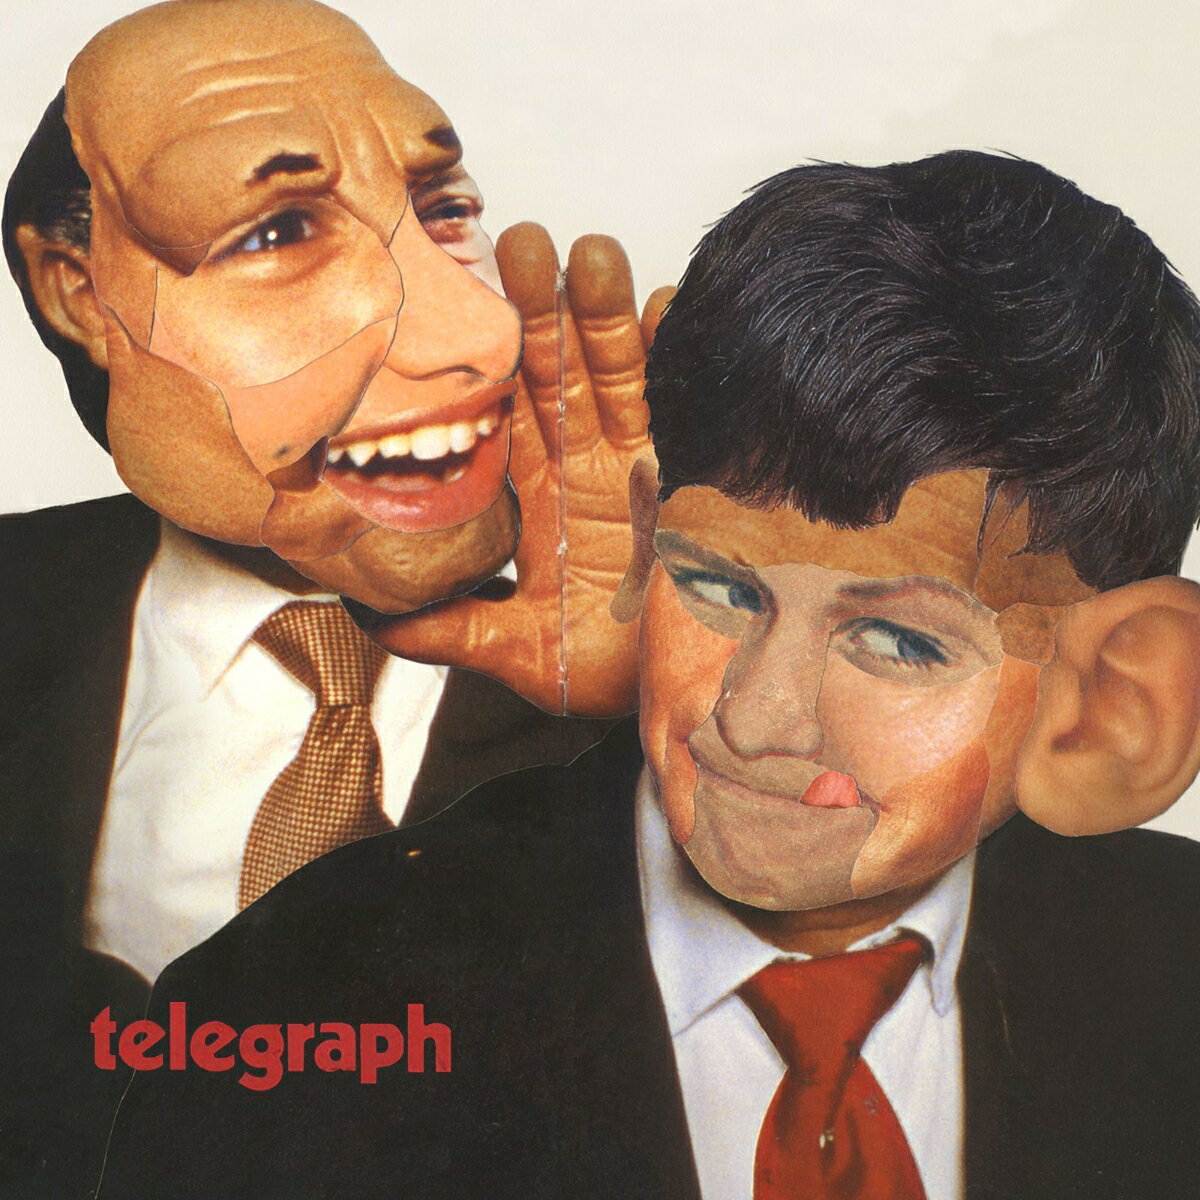 telegraph (CD＋Blu-ray)